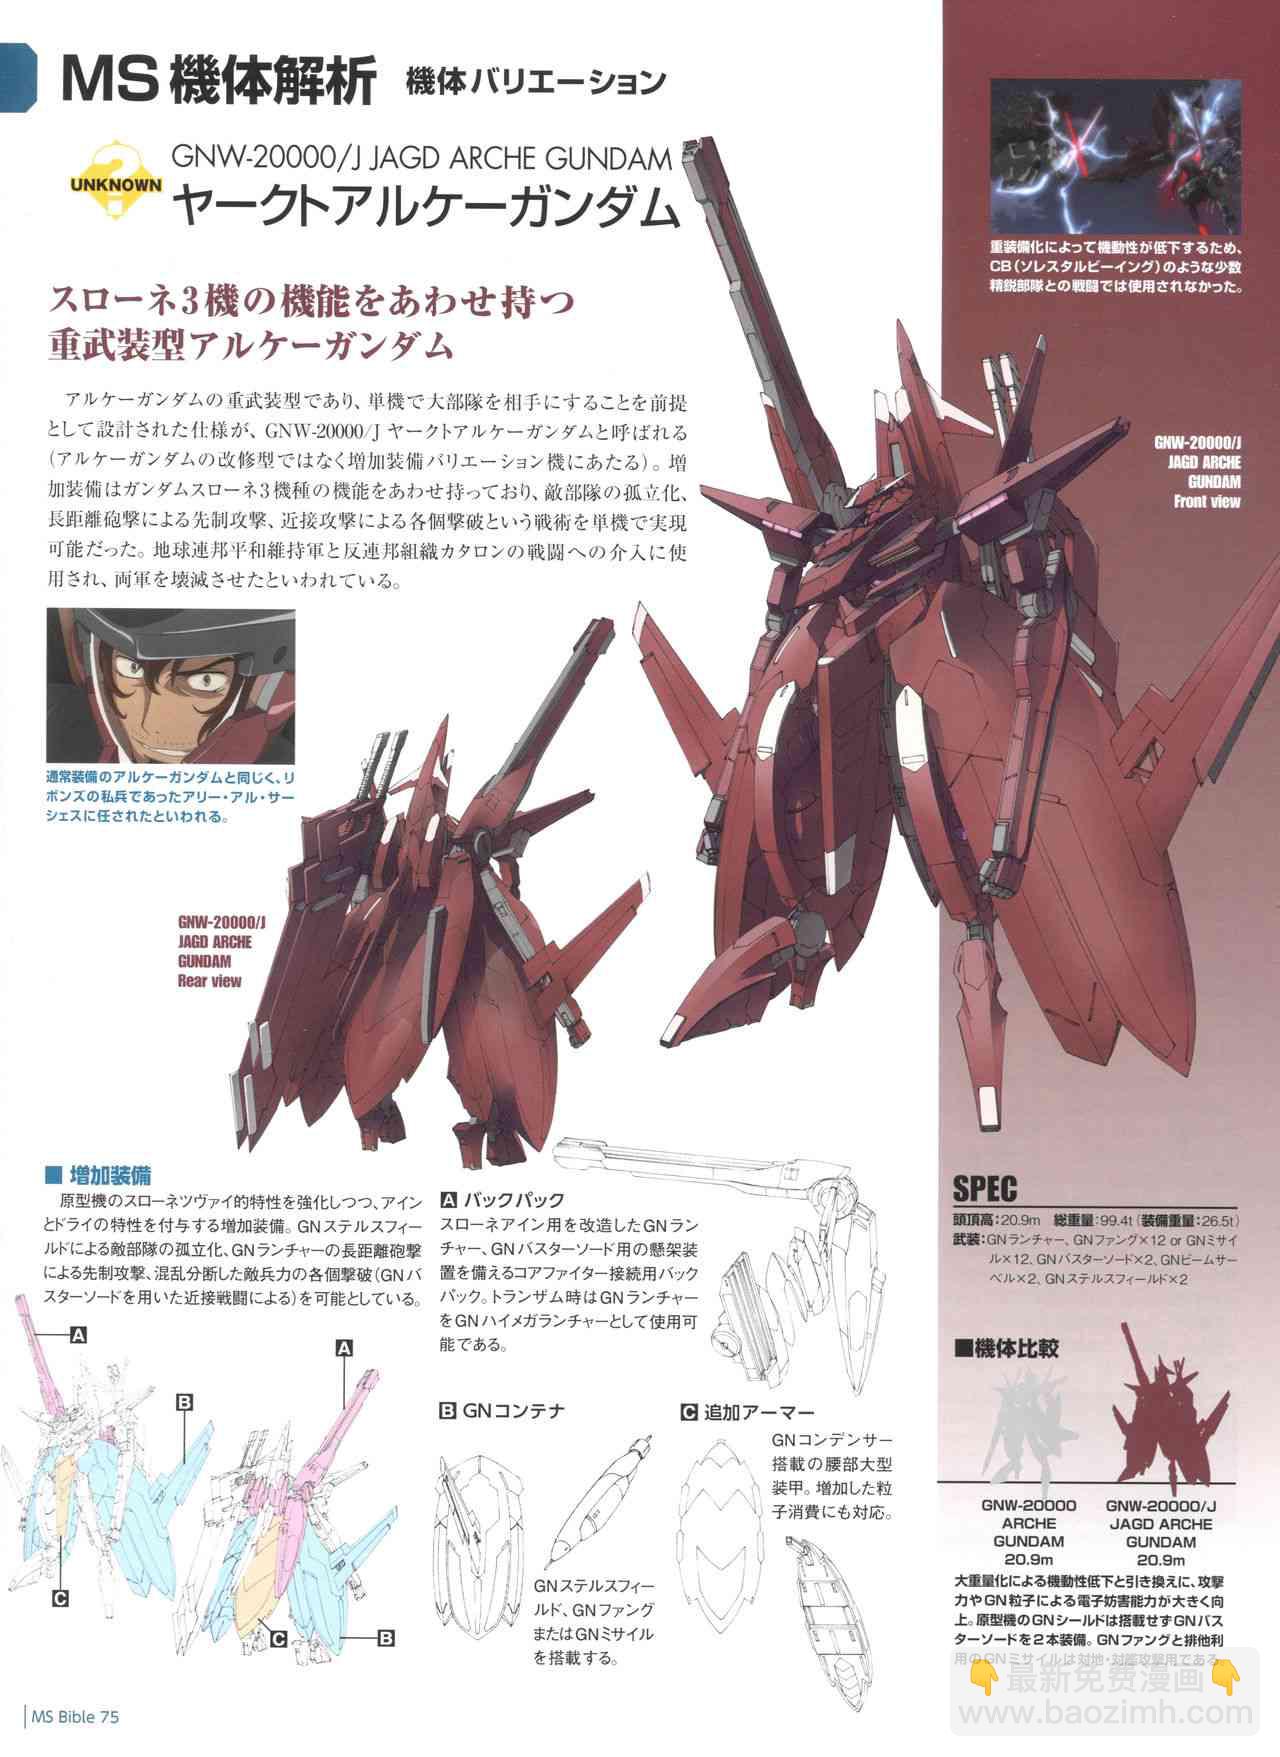 Gundam Mobile Suit Bible - 75卷 - 3